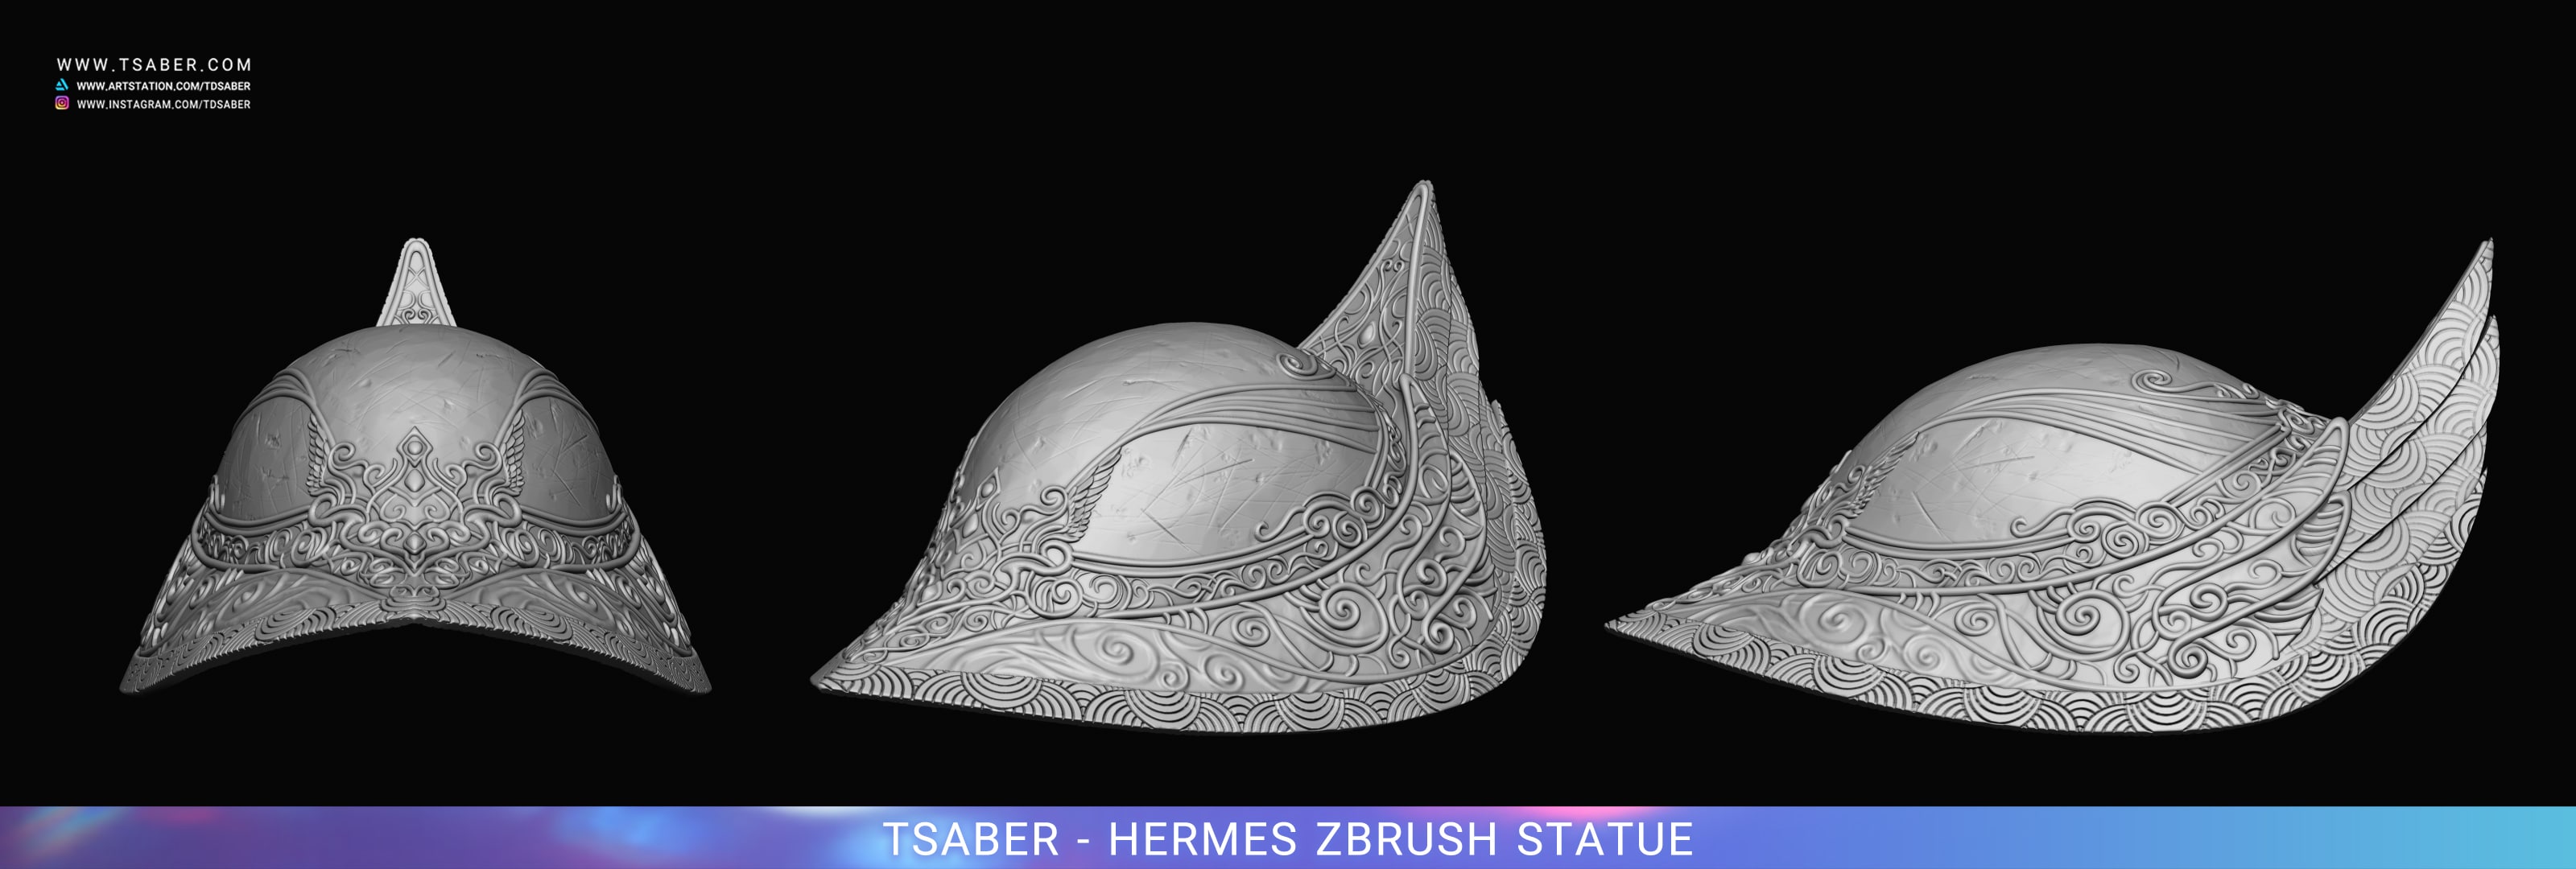 Making of Hermes Statue Zbrush - Blood of Zeus - Tsaber